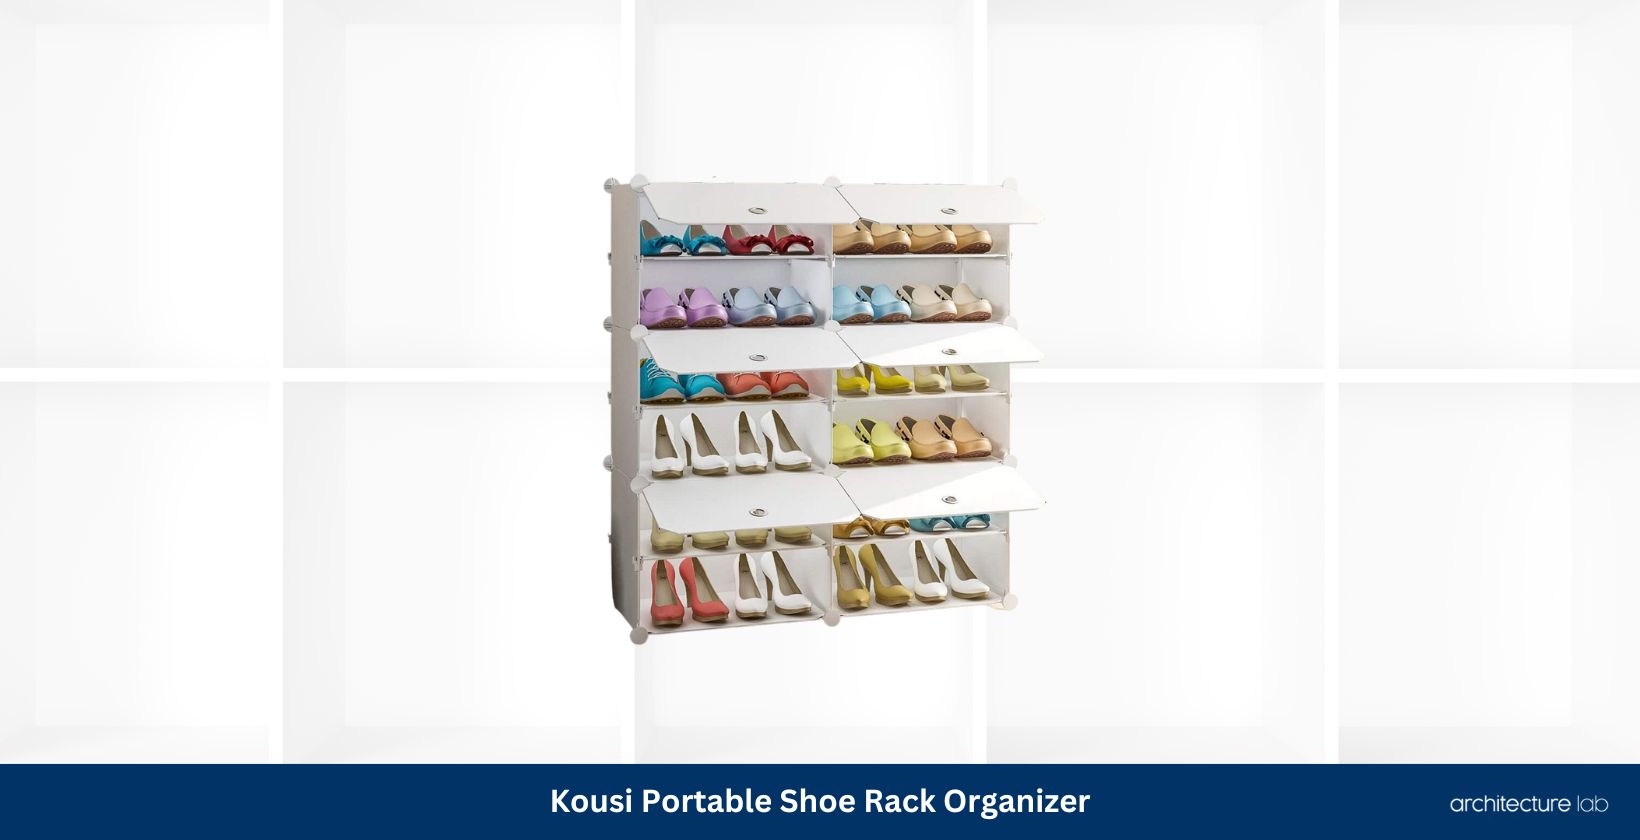 Kousi portable shoe rack organizer